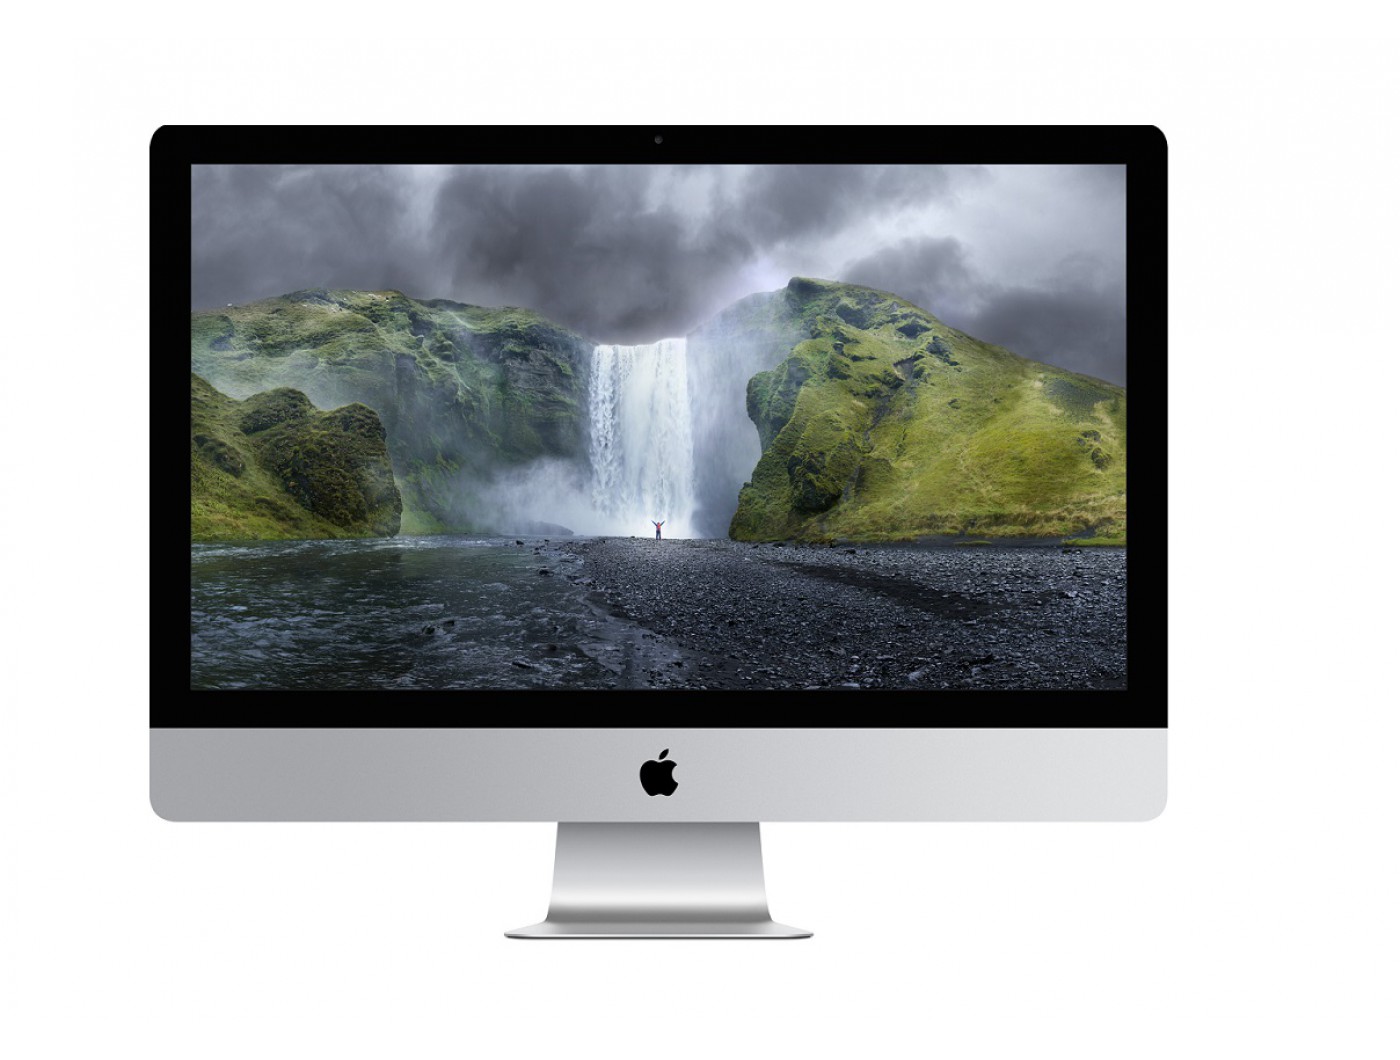 iMac 27-Inch Core i5 3.3GHz Retina 5K, Mid-2015 - MF885LLA - iMac15,1 - A1419 - 2806